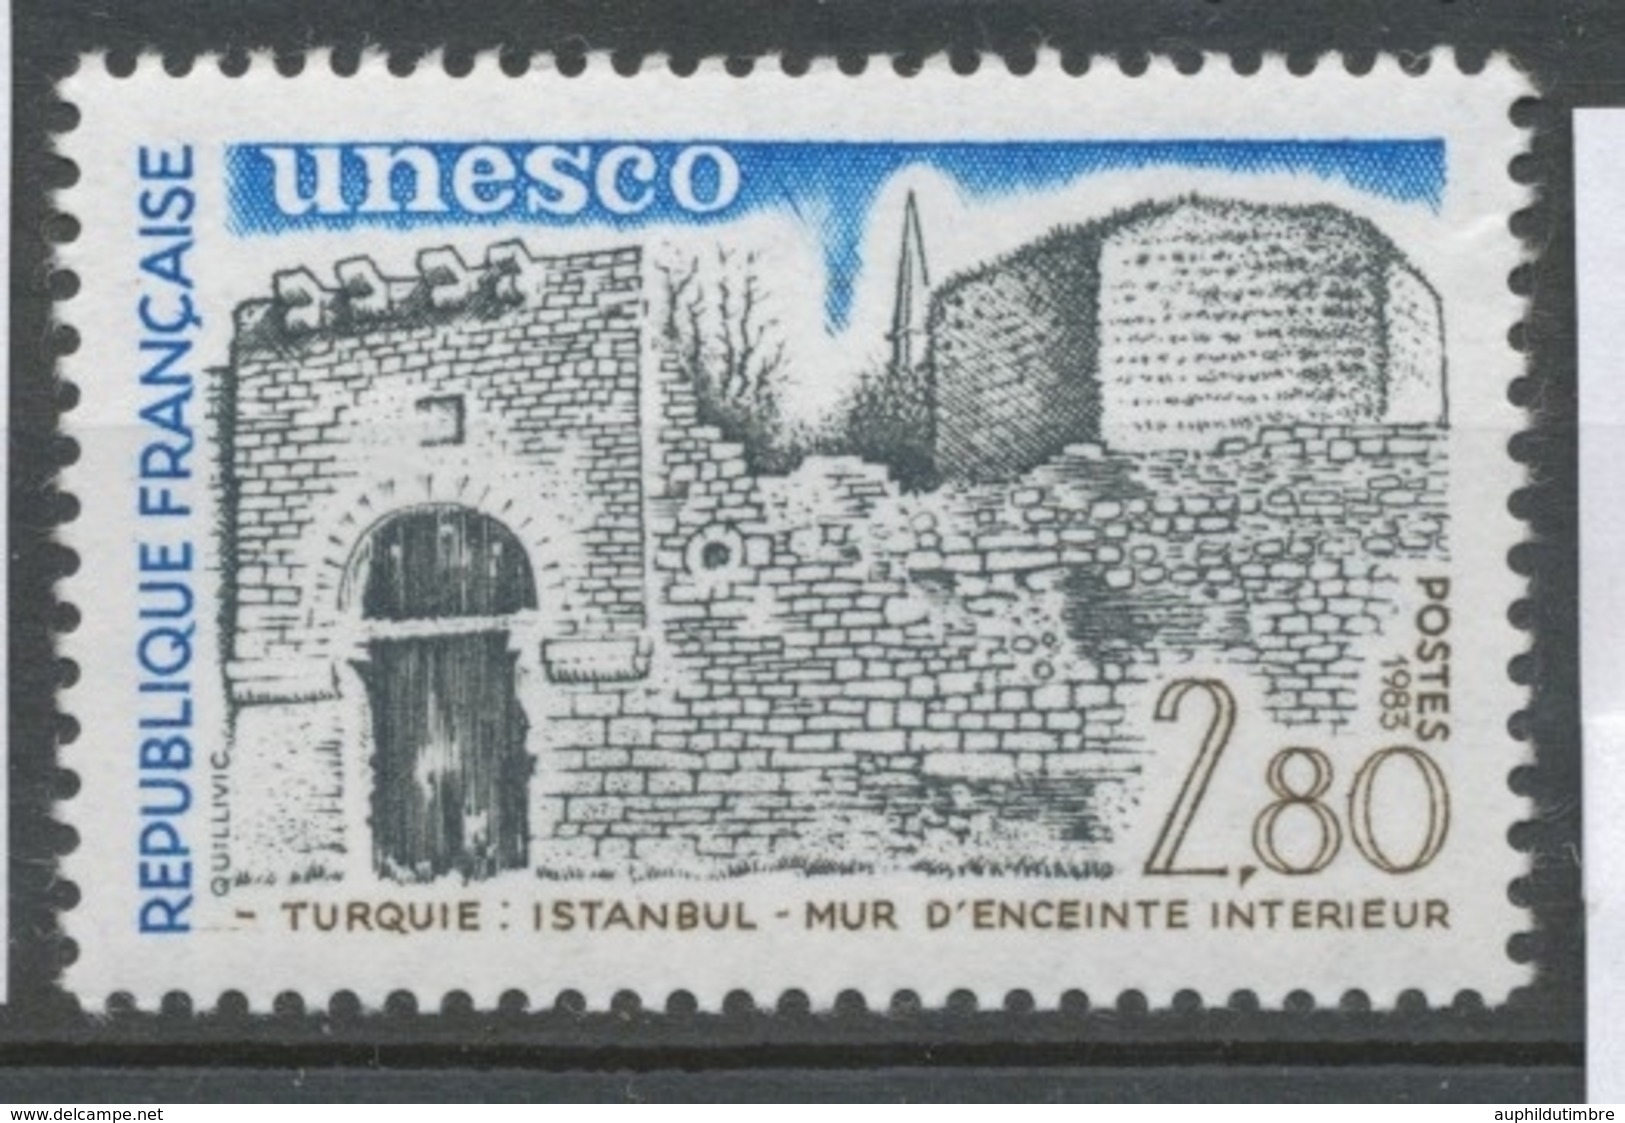 Service N°76 UNESCO Mur D'enceinte Istanbul - Turquie 2f80 ZS76 - Mint/Hinged